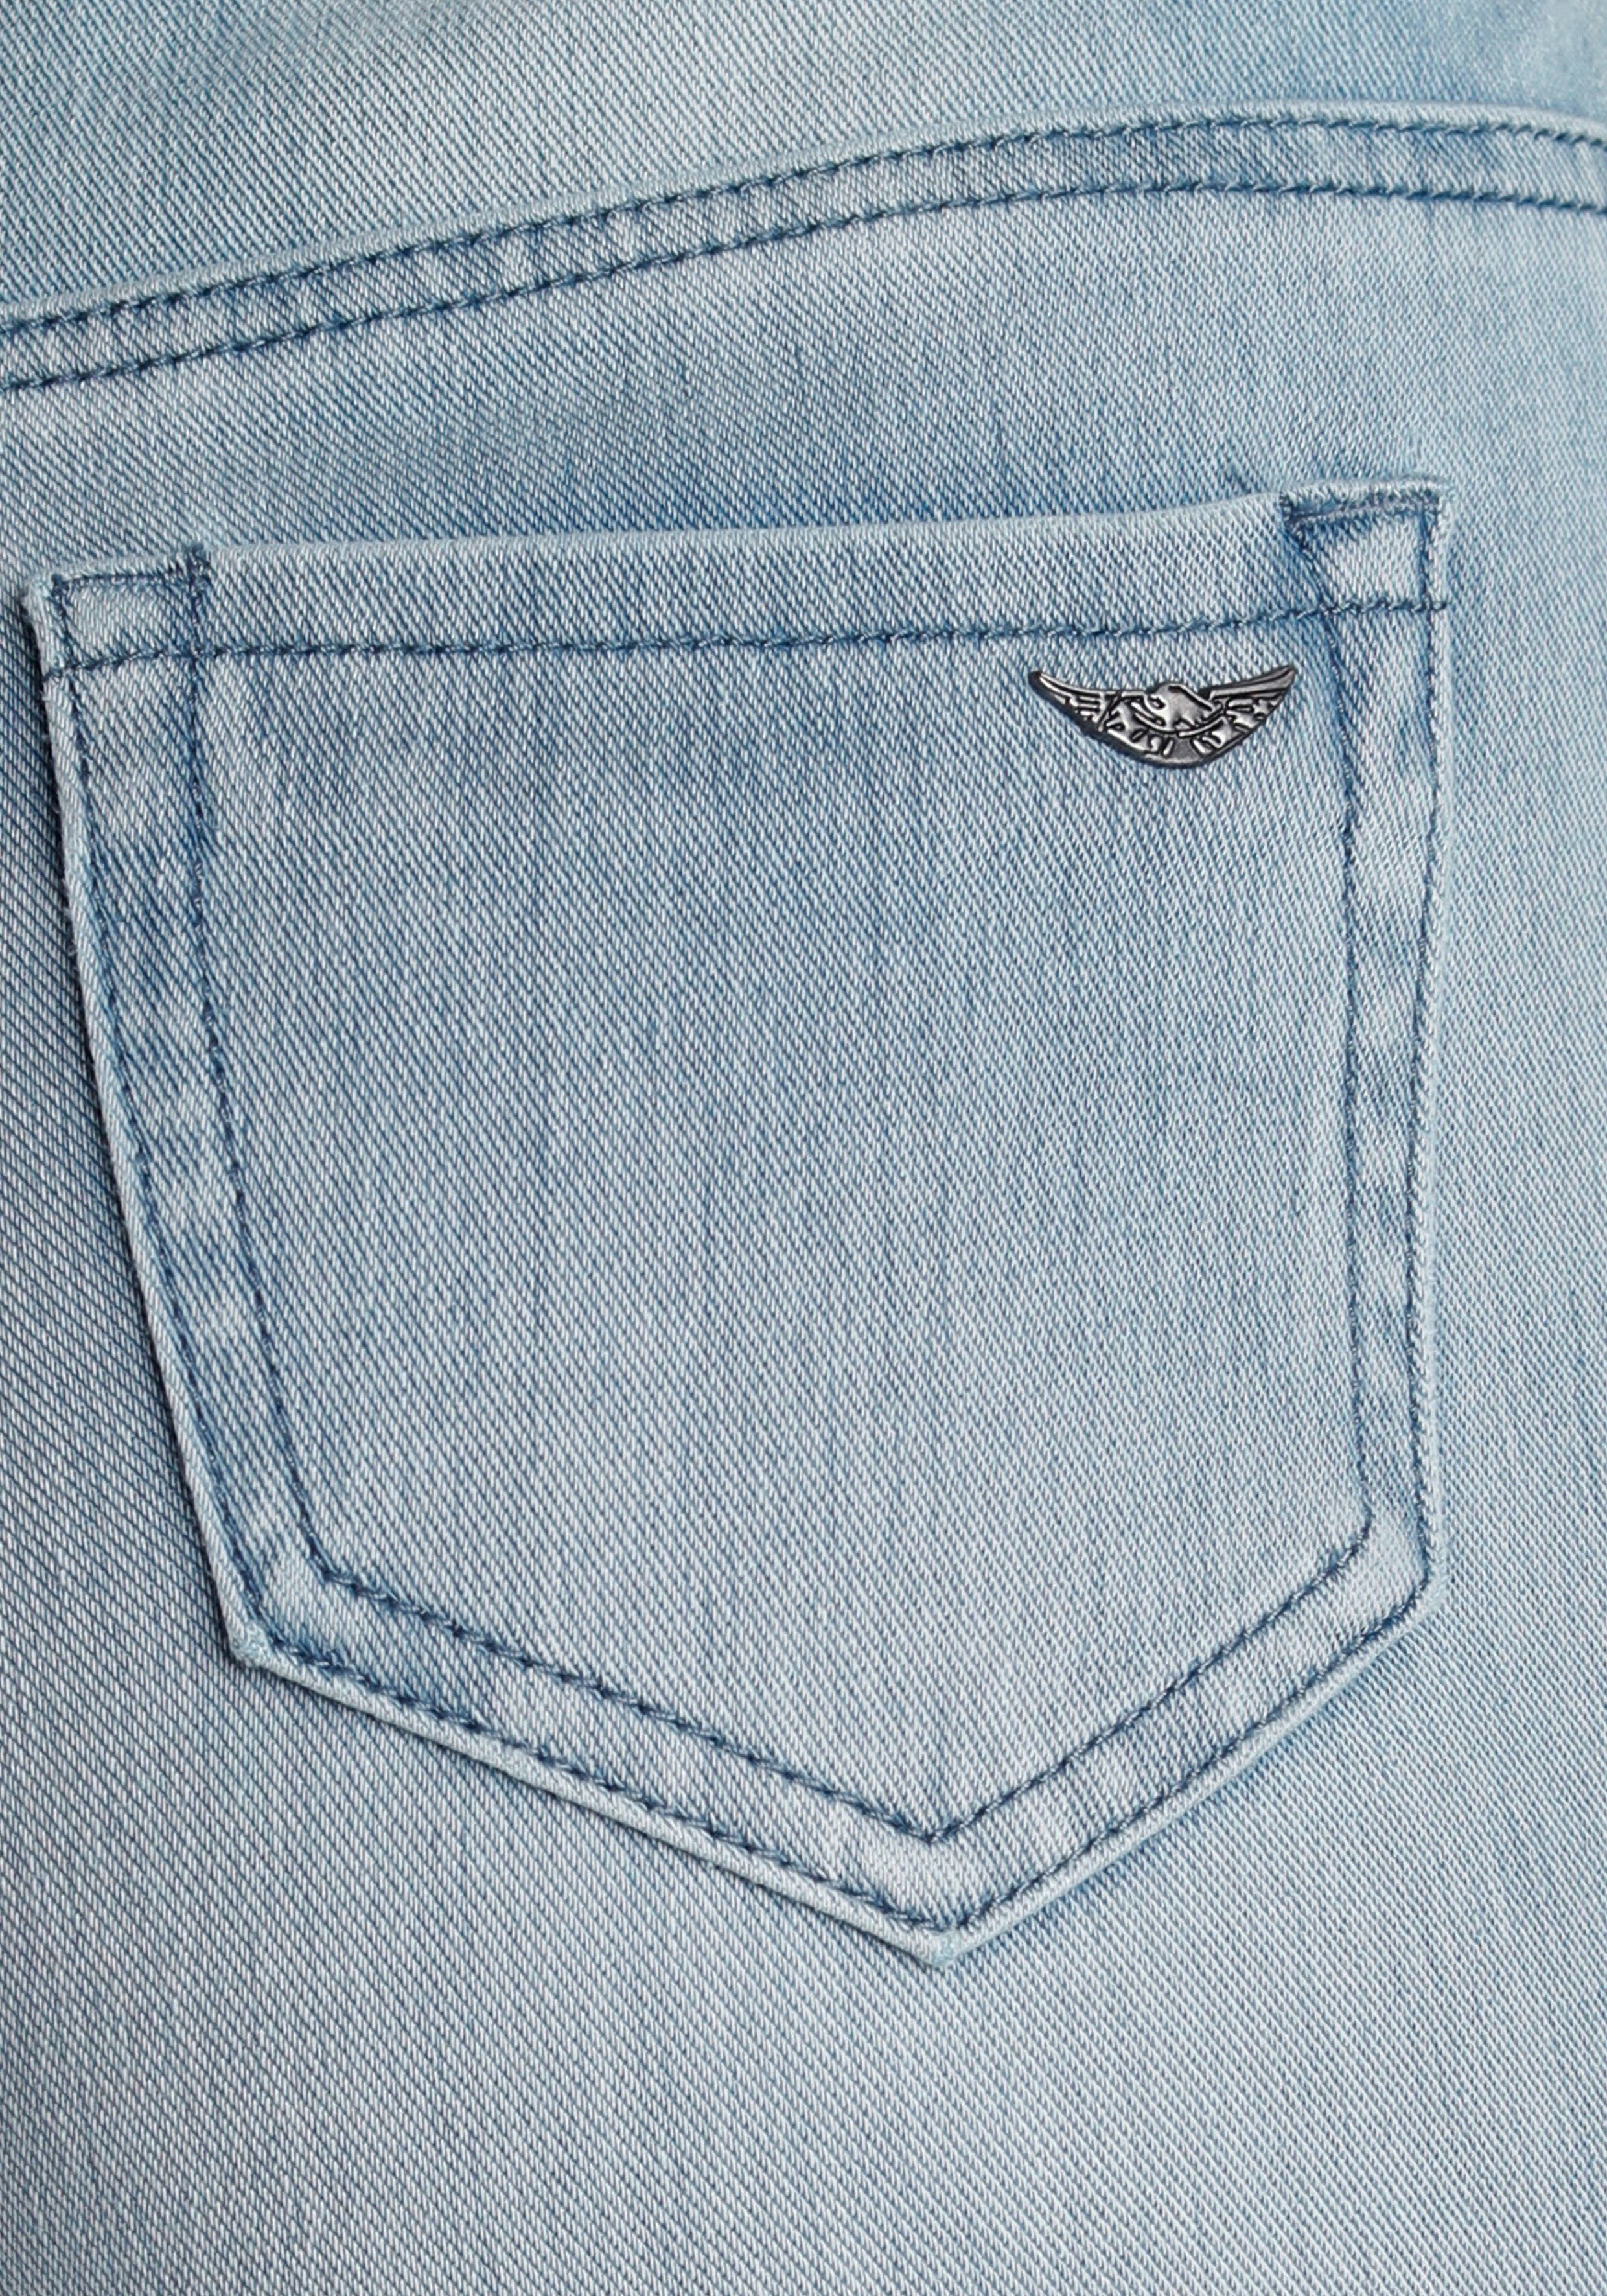 Pants Denim-Optik in Waist High light-blue-washed Jogg Arizona